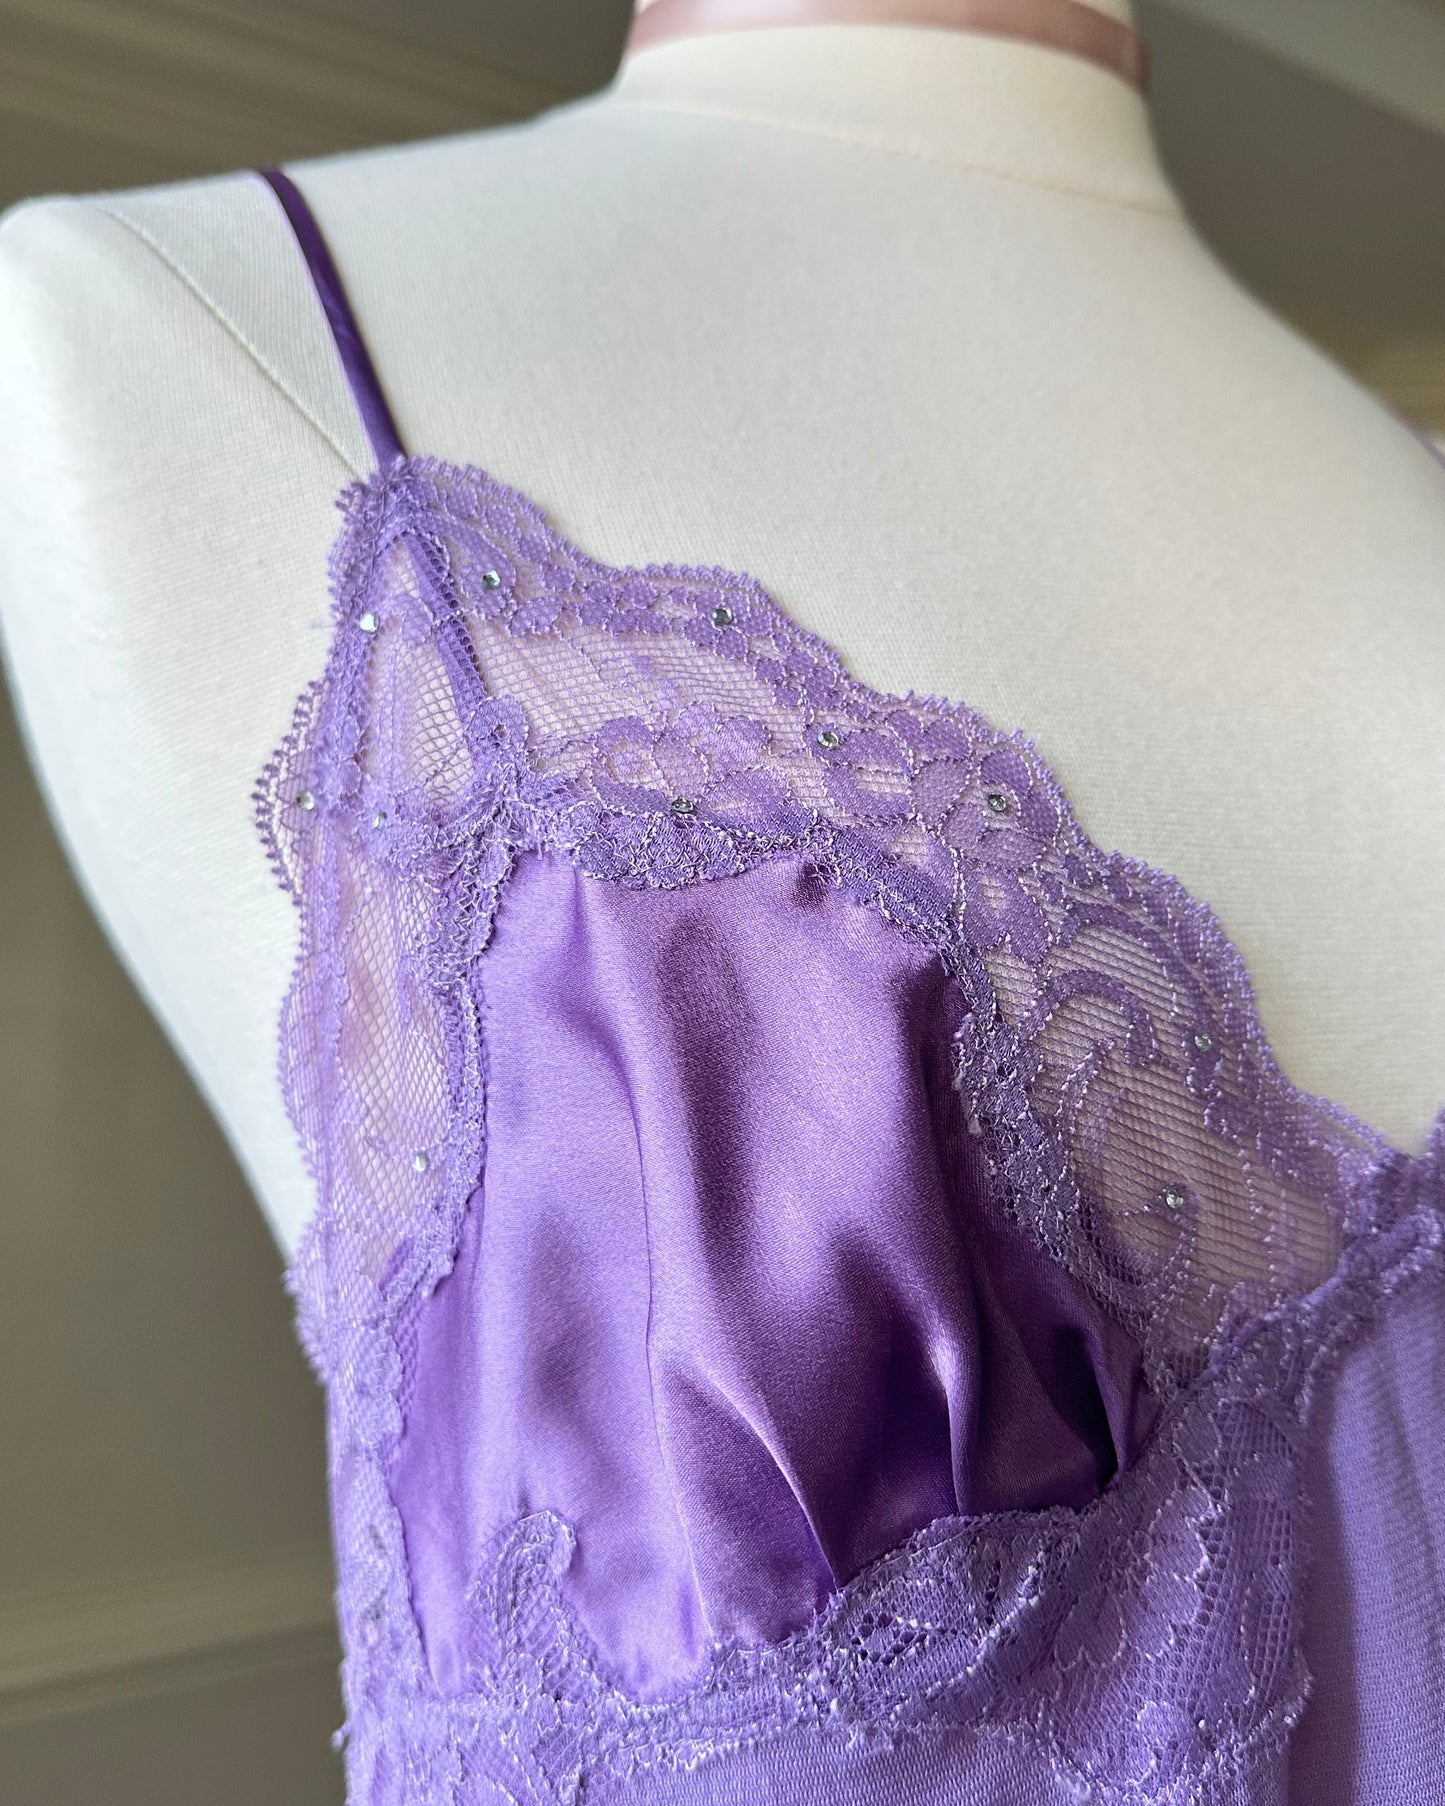 Victoria’s Secret Sultry Night Slip in Orchid Purple